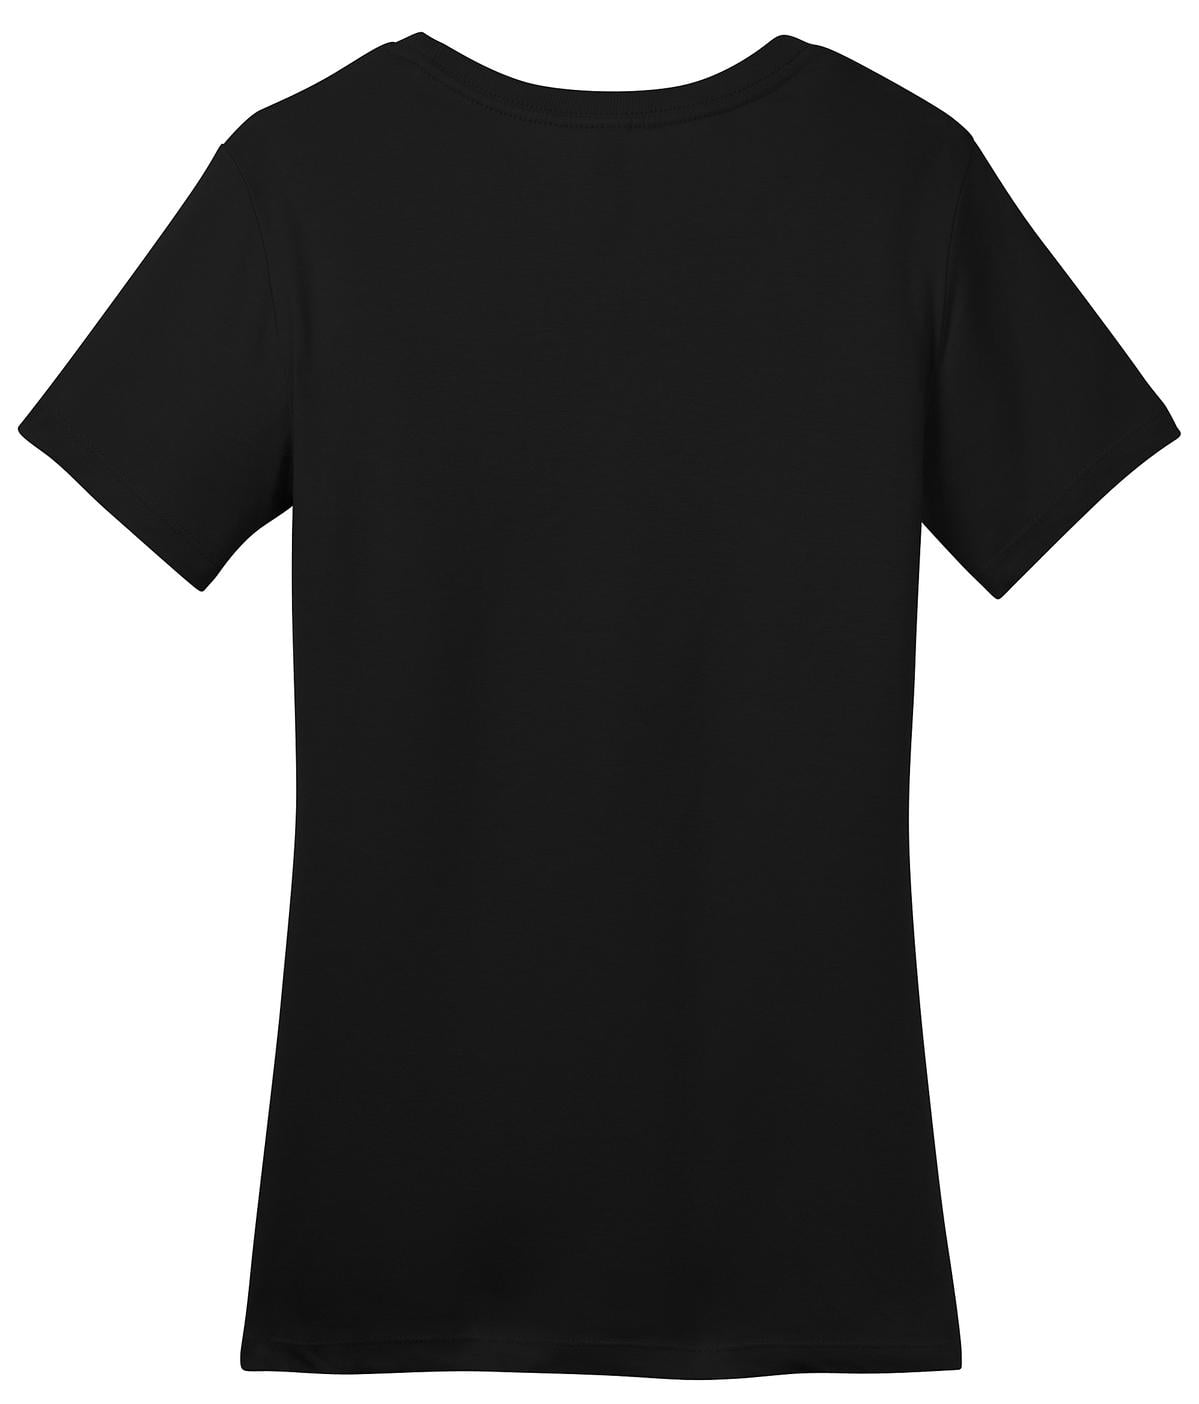 FlekmanArt Ladies Black Shirt Blank Shirts For Heat Transfer Stretch Tee  Shirts Women Cute Black Tops at  Women's Clothing store